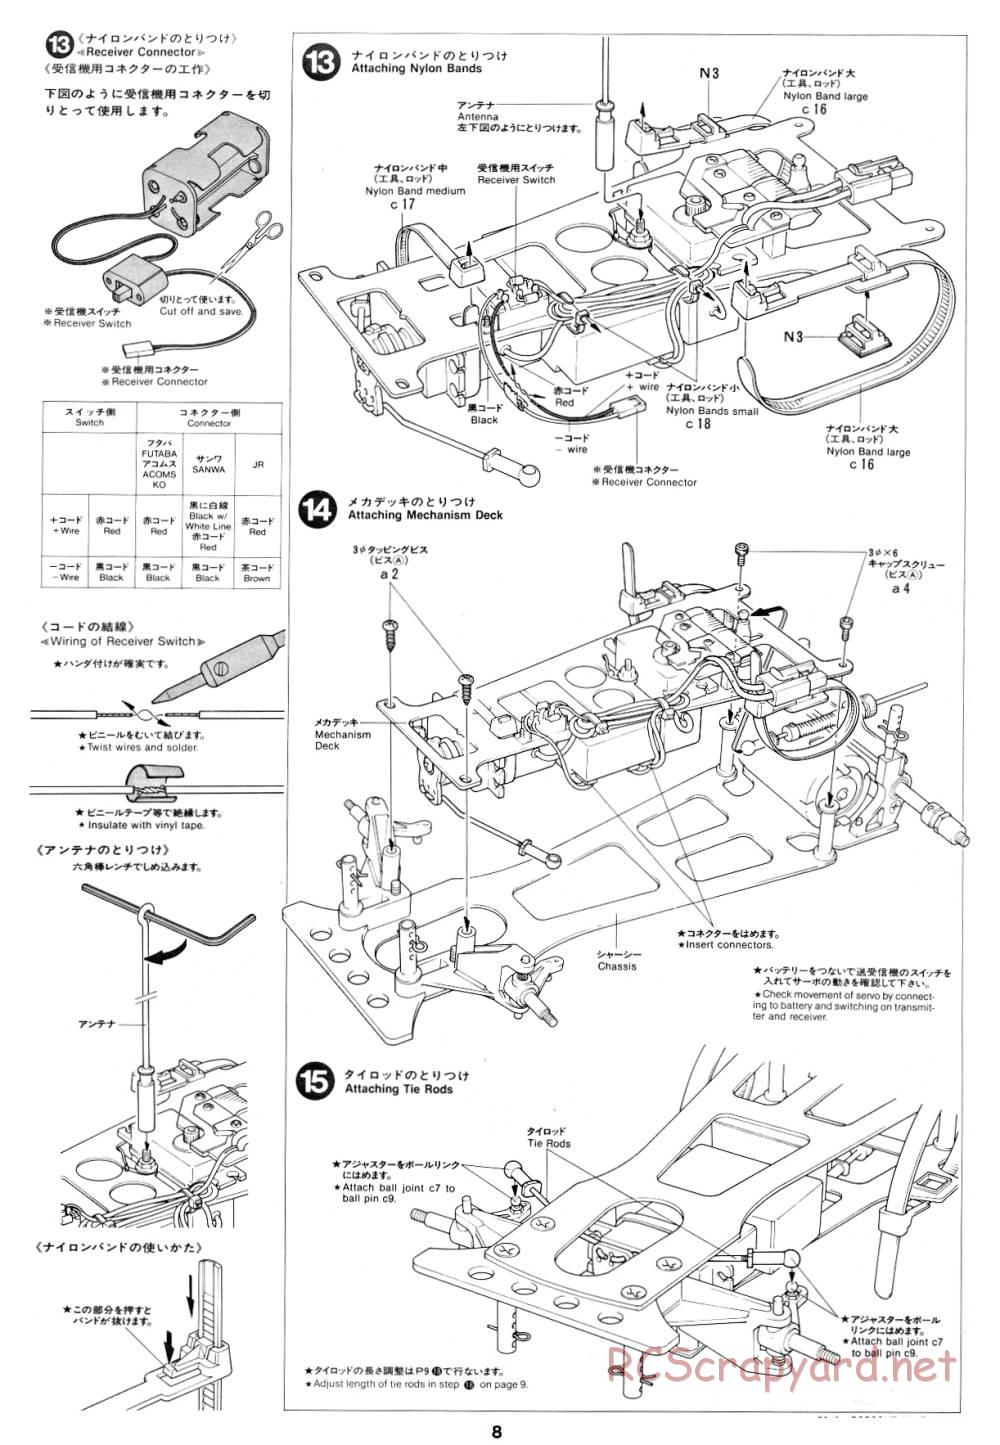 Tamiya - Porsche 956 - RM MK.5 - 58042 - Manual - Page 8